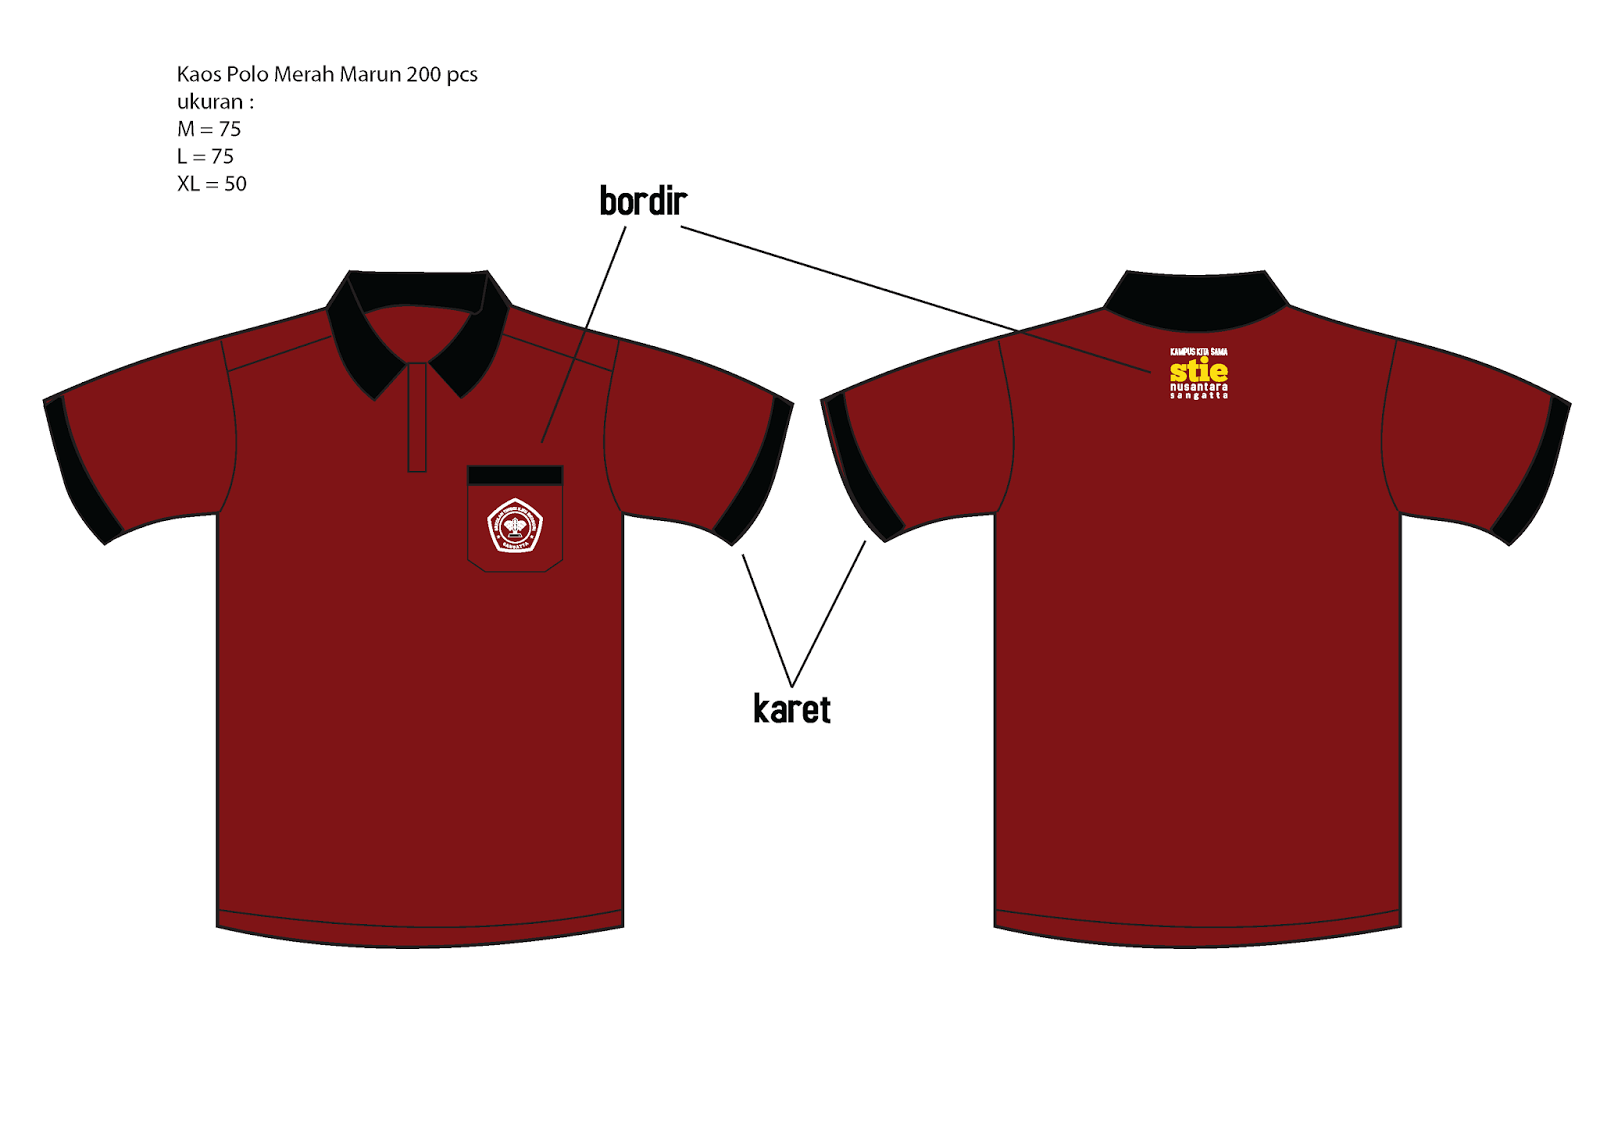 Order Kaos Polo Merah Marun - Cetak Offset dan Digital 